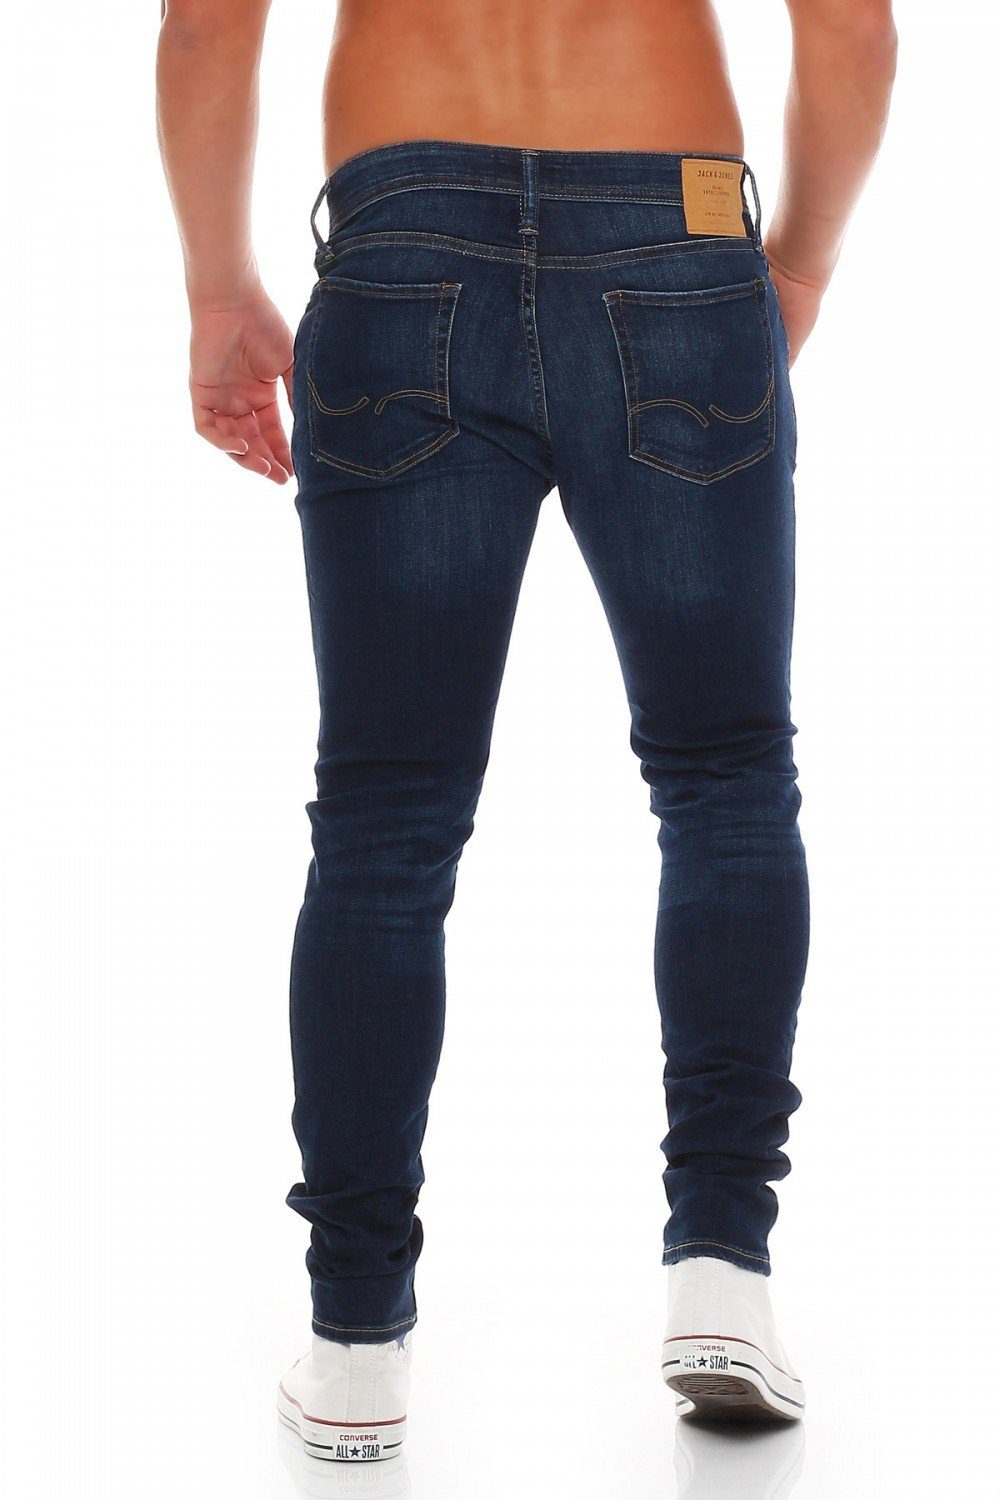 & Fit Skinny Herren AM014 Jack Jack Jeans Liam Skinny-fit-Jeans Original & Jones Jones